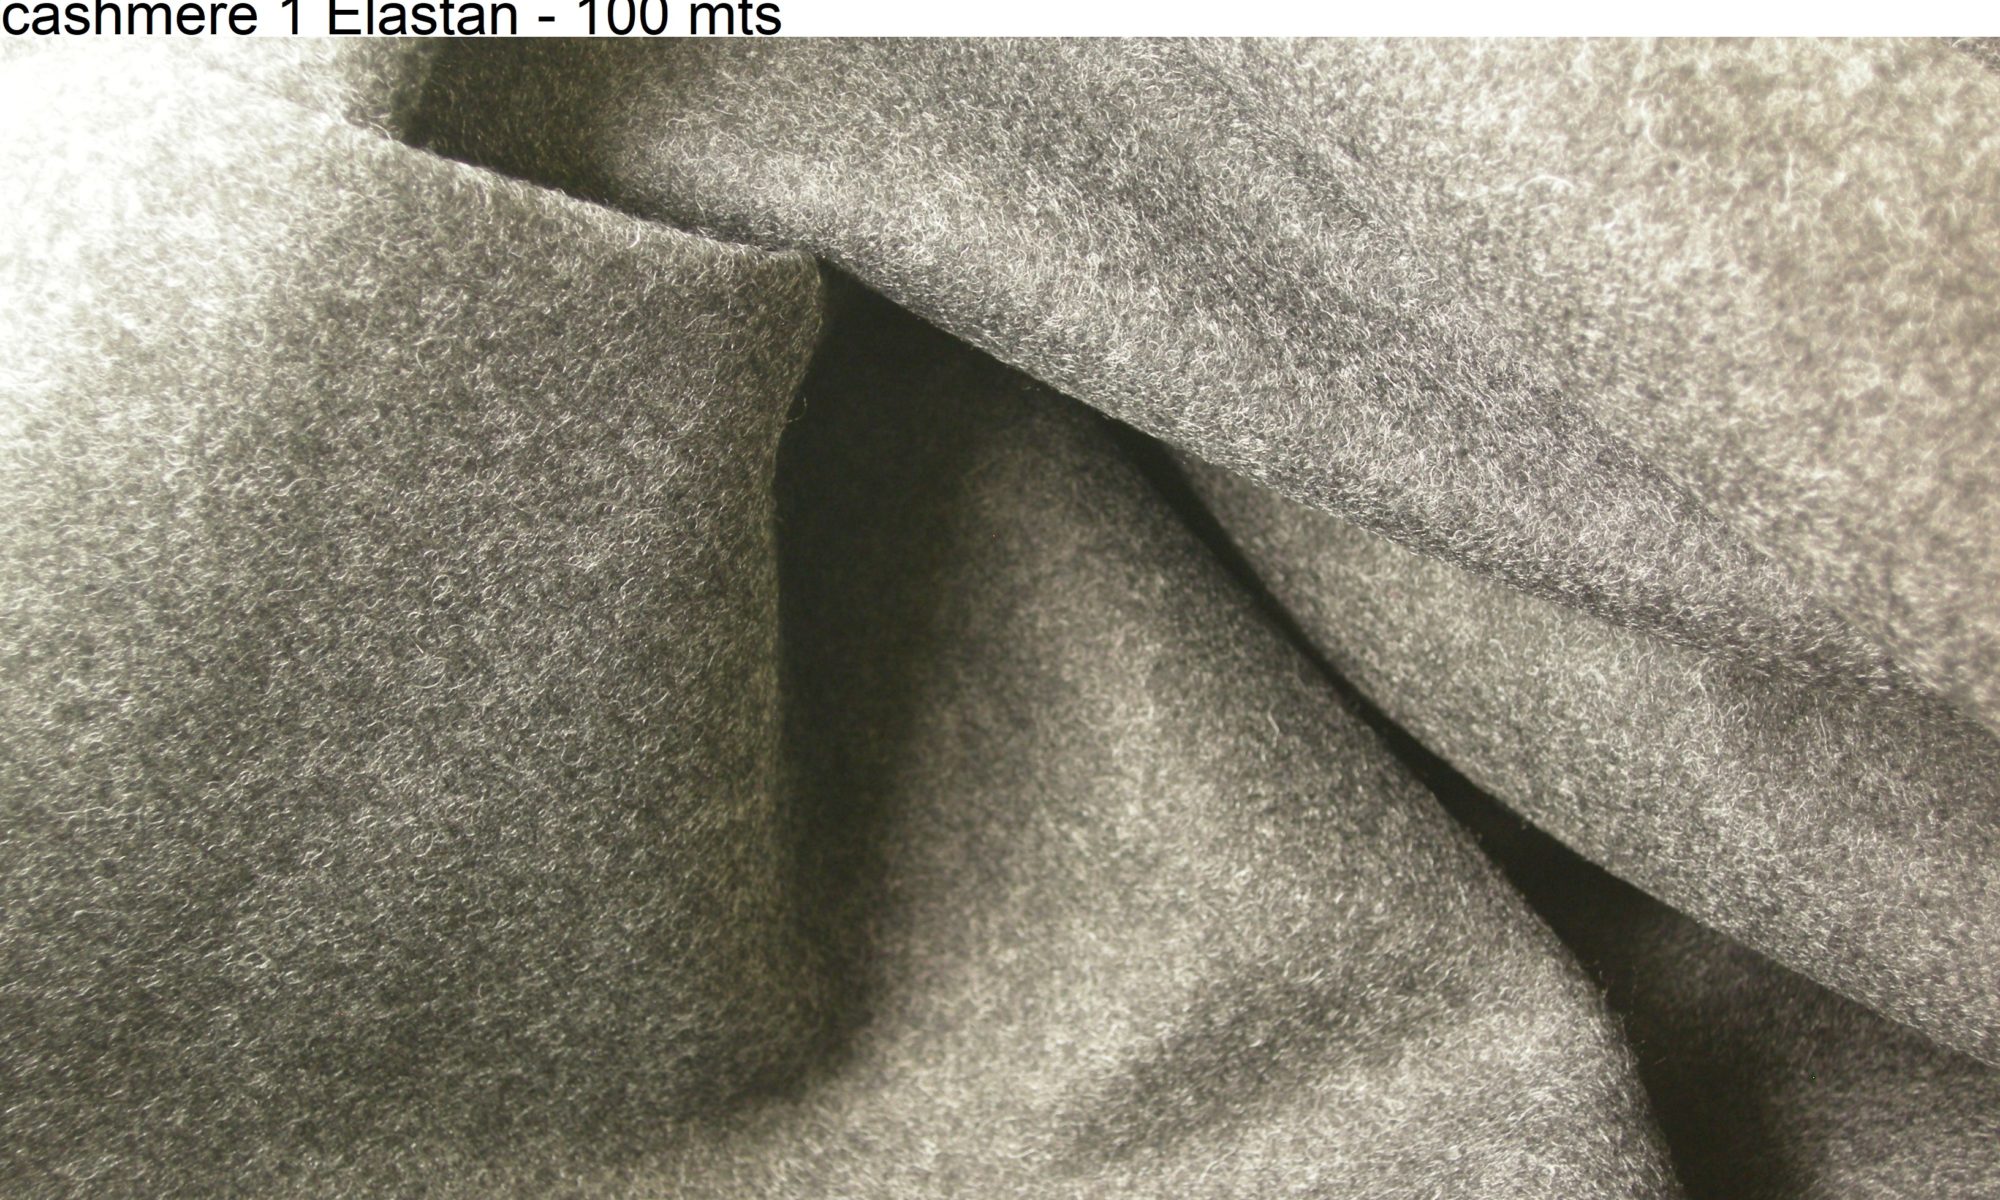 ART 7188 Melange grey felt cashmere blend jacket fabric WIDTH cm130 WEIGHT gr380 COMPOSITION 70Virgin wool 24 Nylon polyammide 5 cashmere 1 Elastan - 100 mts